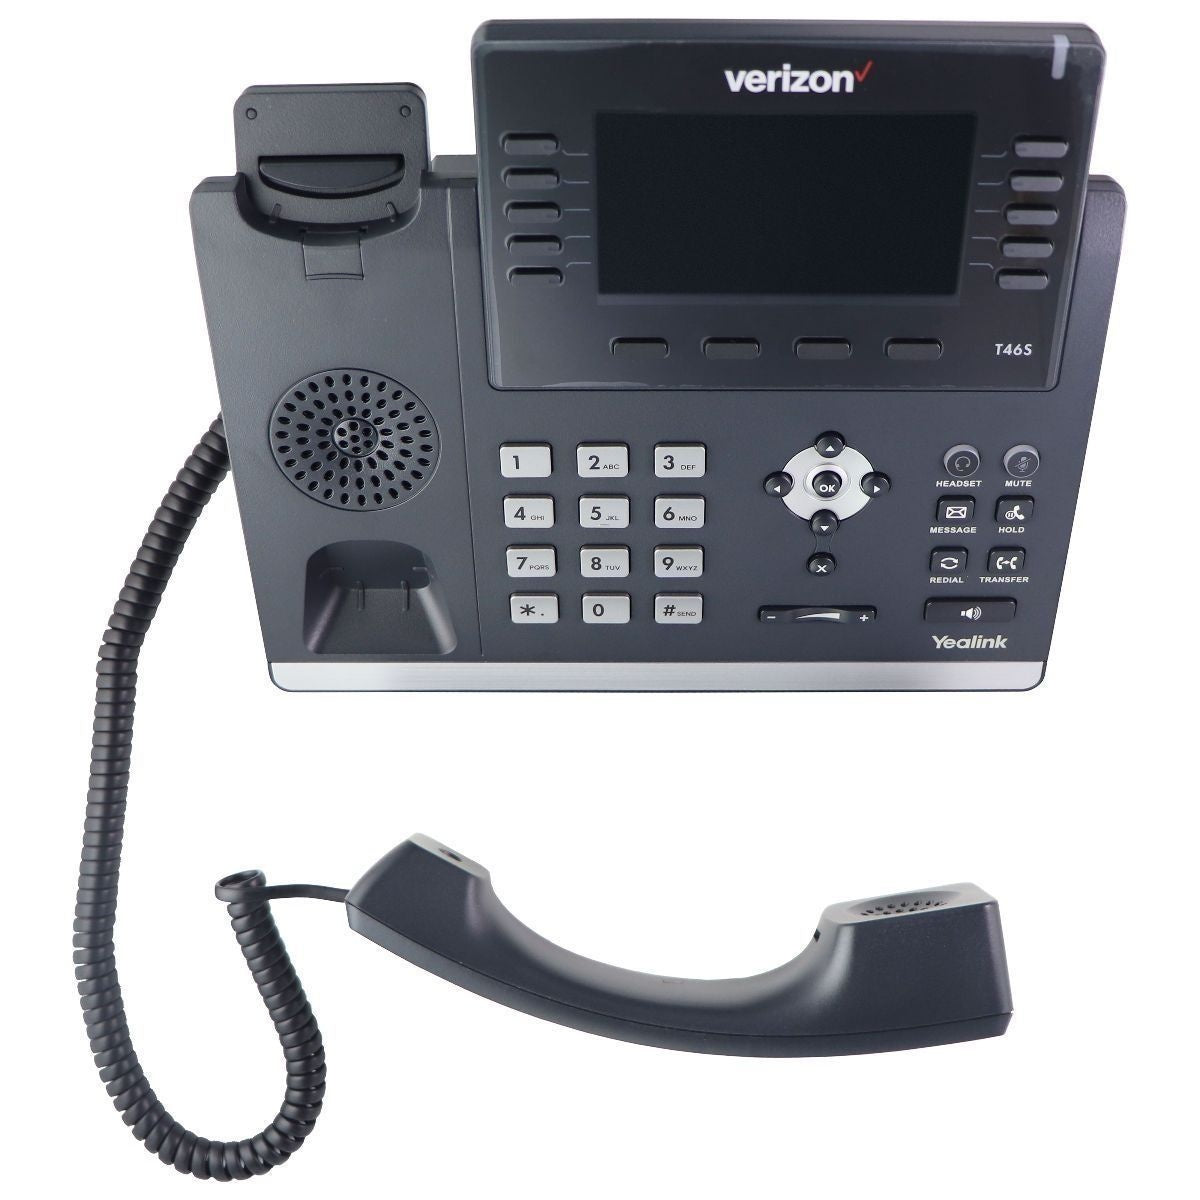 Verizon One Talk T46SW IP Desk Phone - Black (T46SW) Home Telephones & Accessories - Corded Telephones Verizon    - Simple Cell Bulk Wholesale Pricing - USA Seller